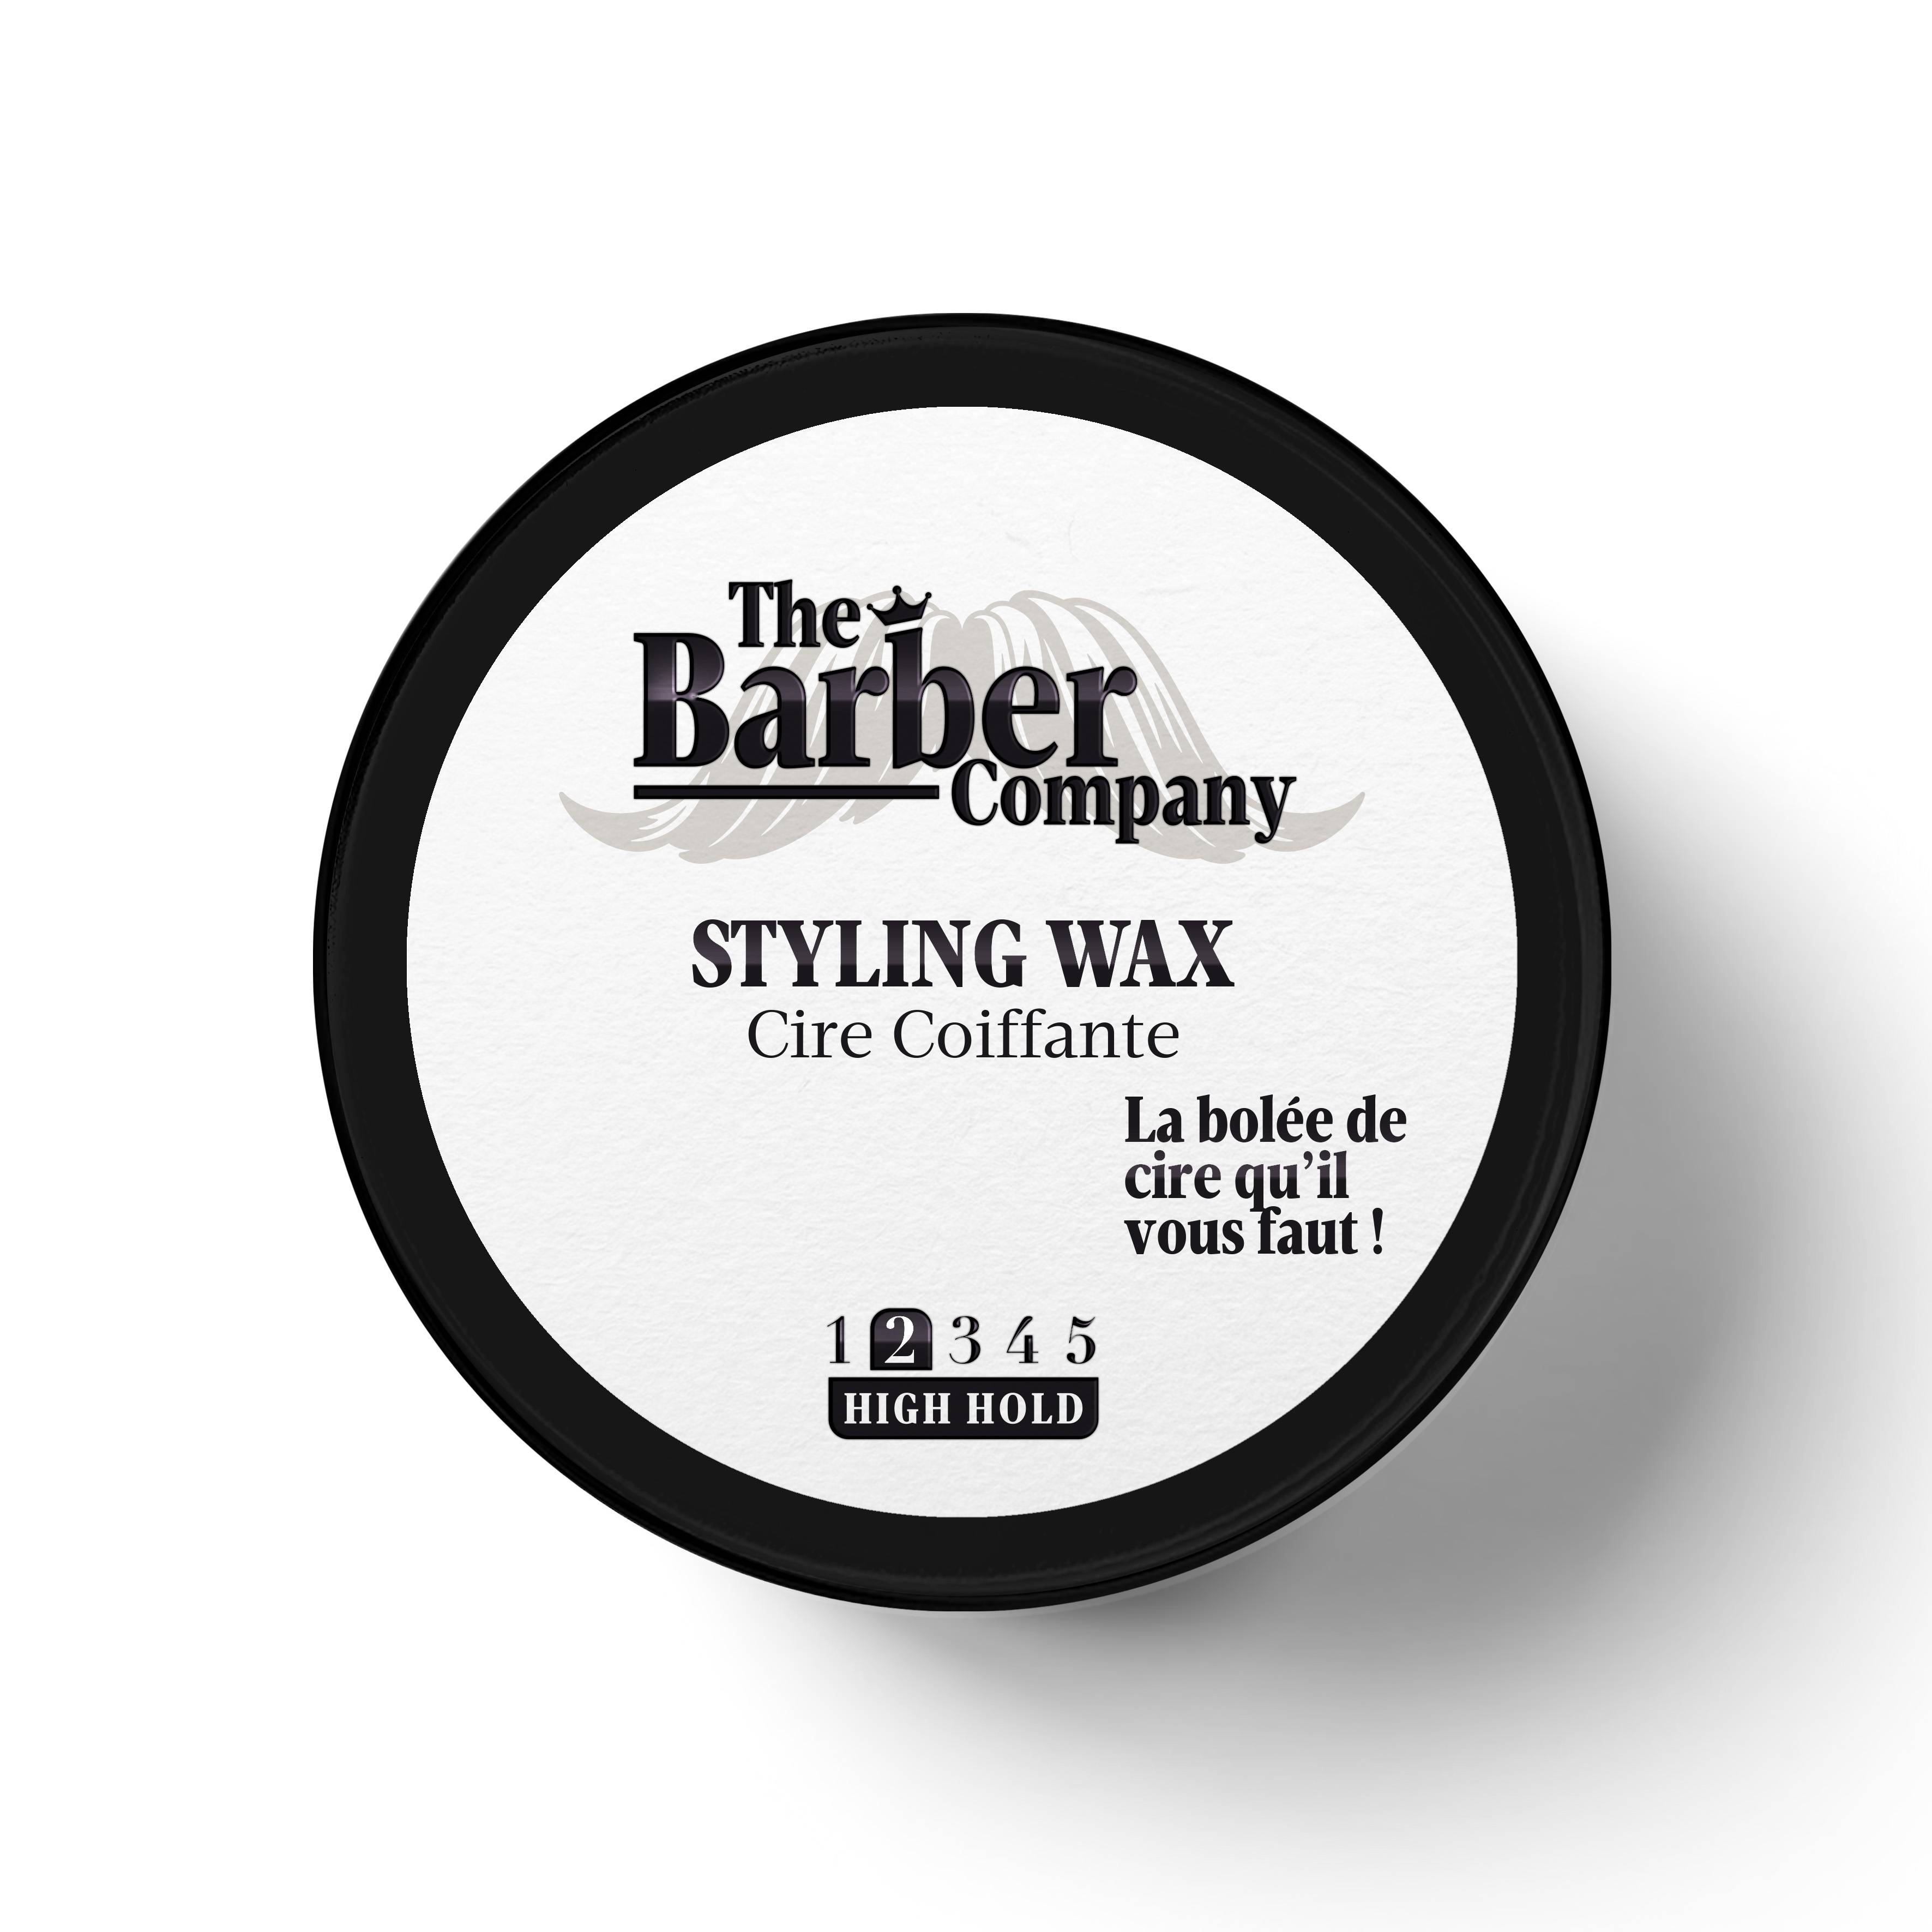 Cire coiffante - Styling Wax 75gr de la marque The Barber Company Contenance 75g - 1